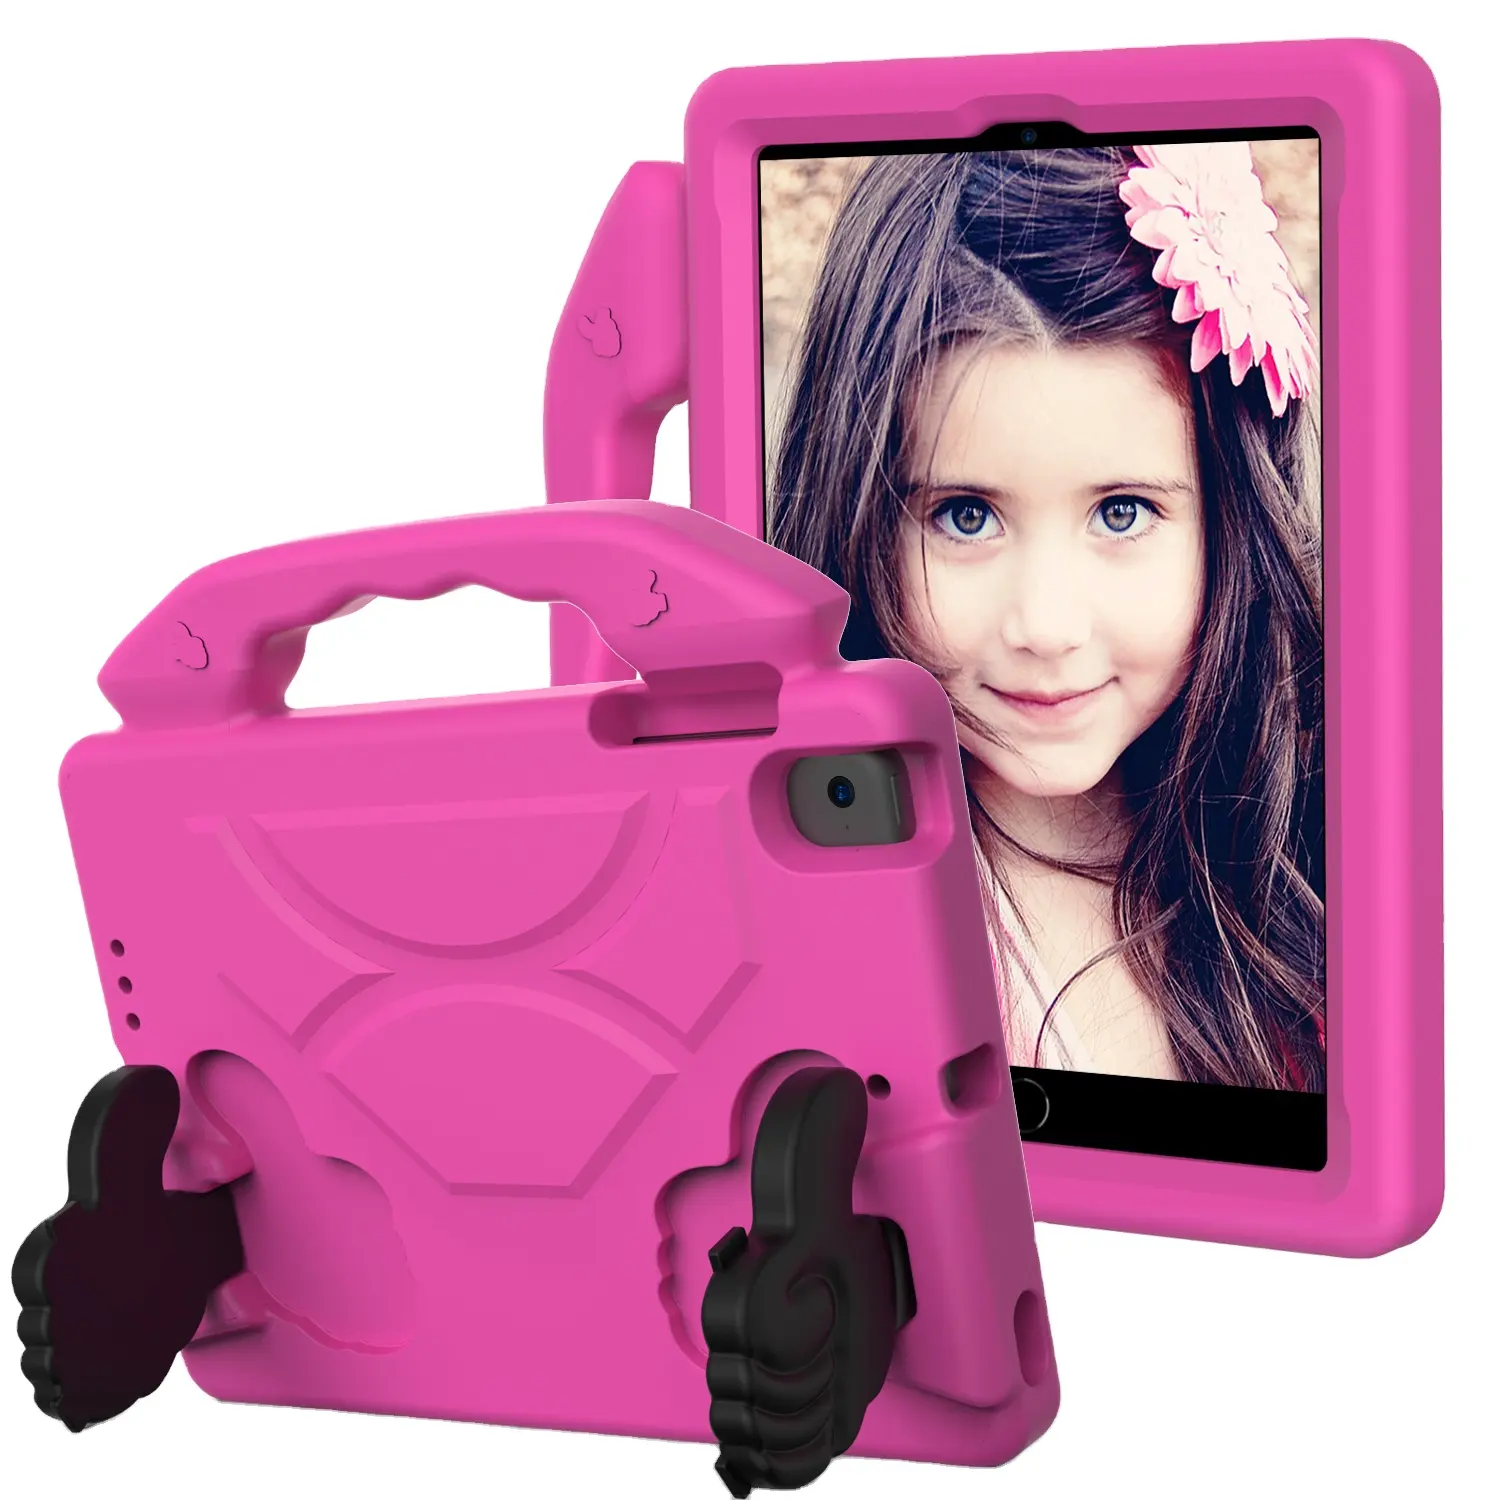 Anak-anak Aman Bebas Racun EVA Tangan Grip Stand Shockproof Silicone Cover untuk iPad Mini 1 2 3 4 5 7.9 Anak-anak Inch Tablet Case